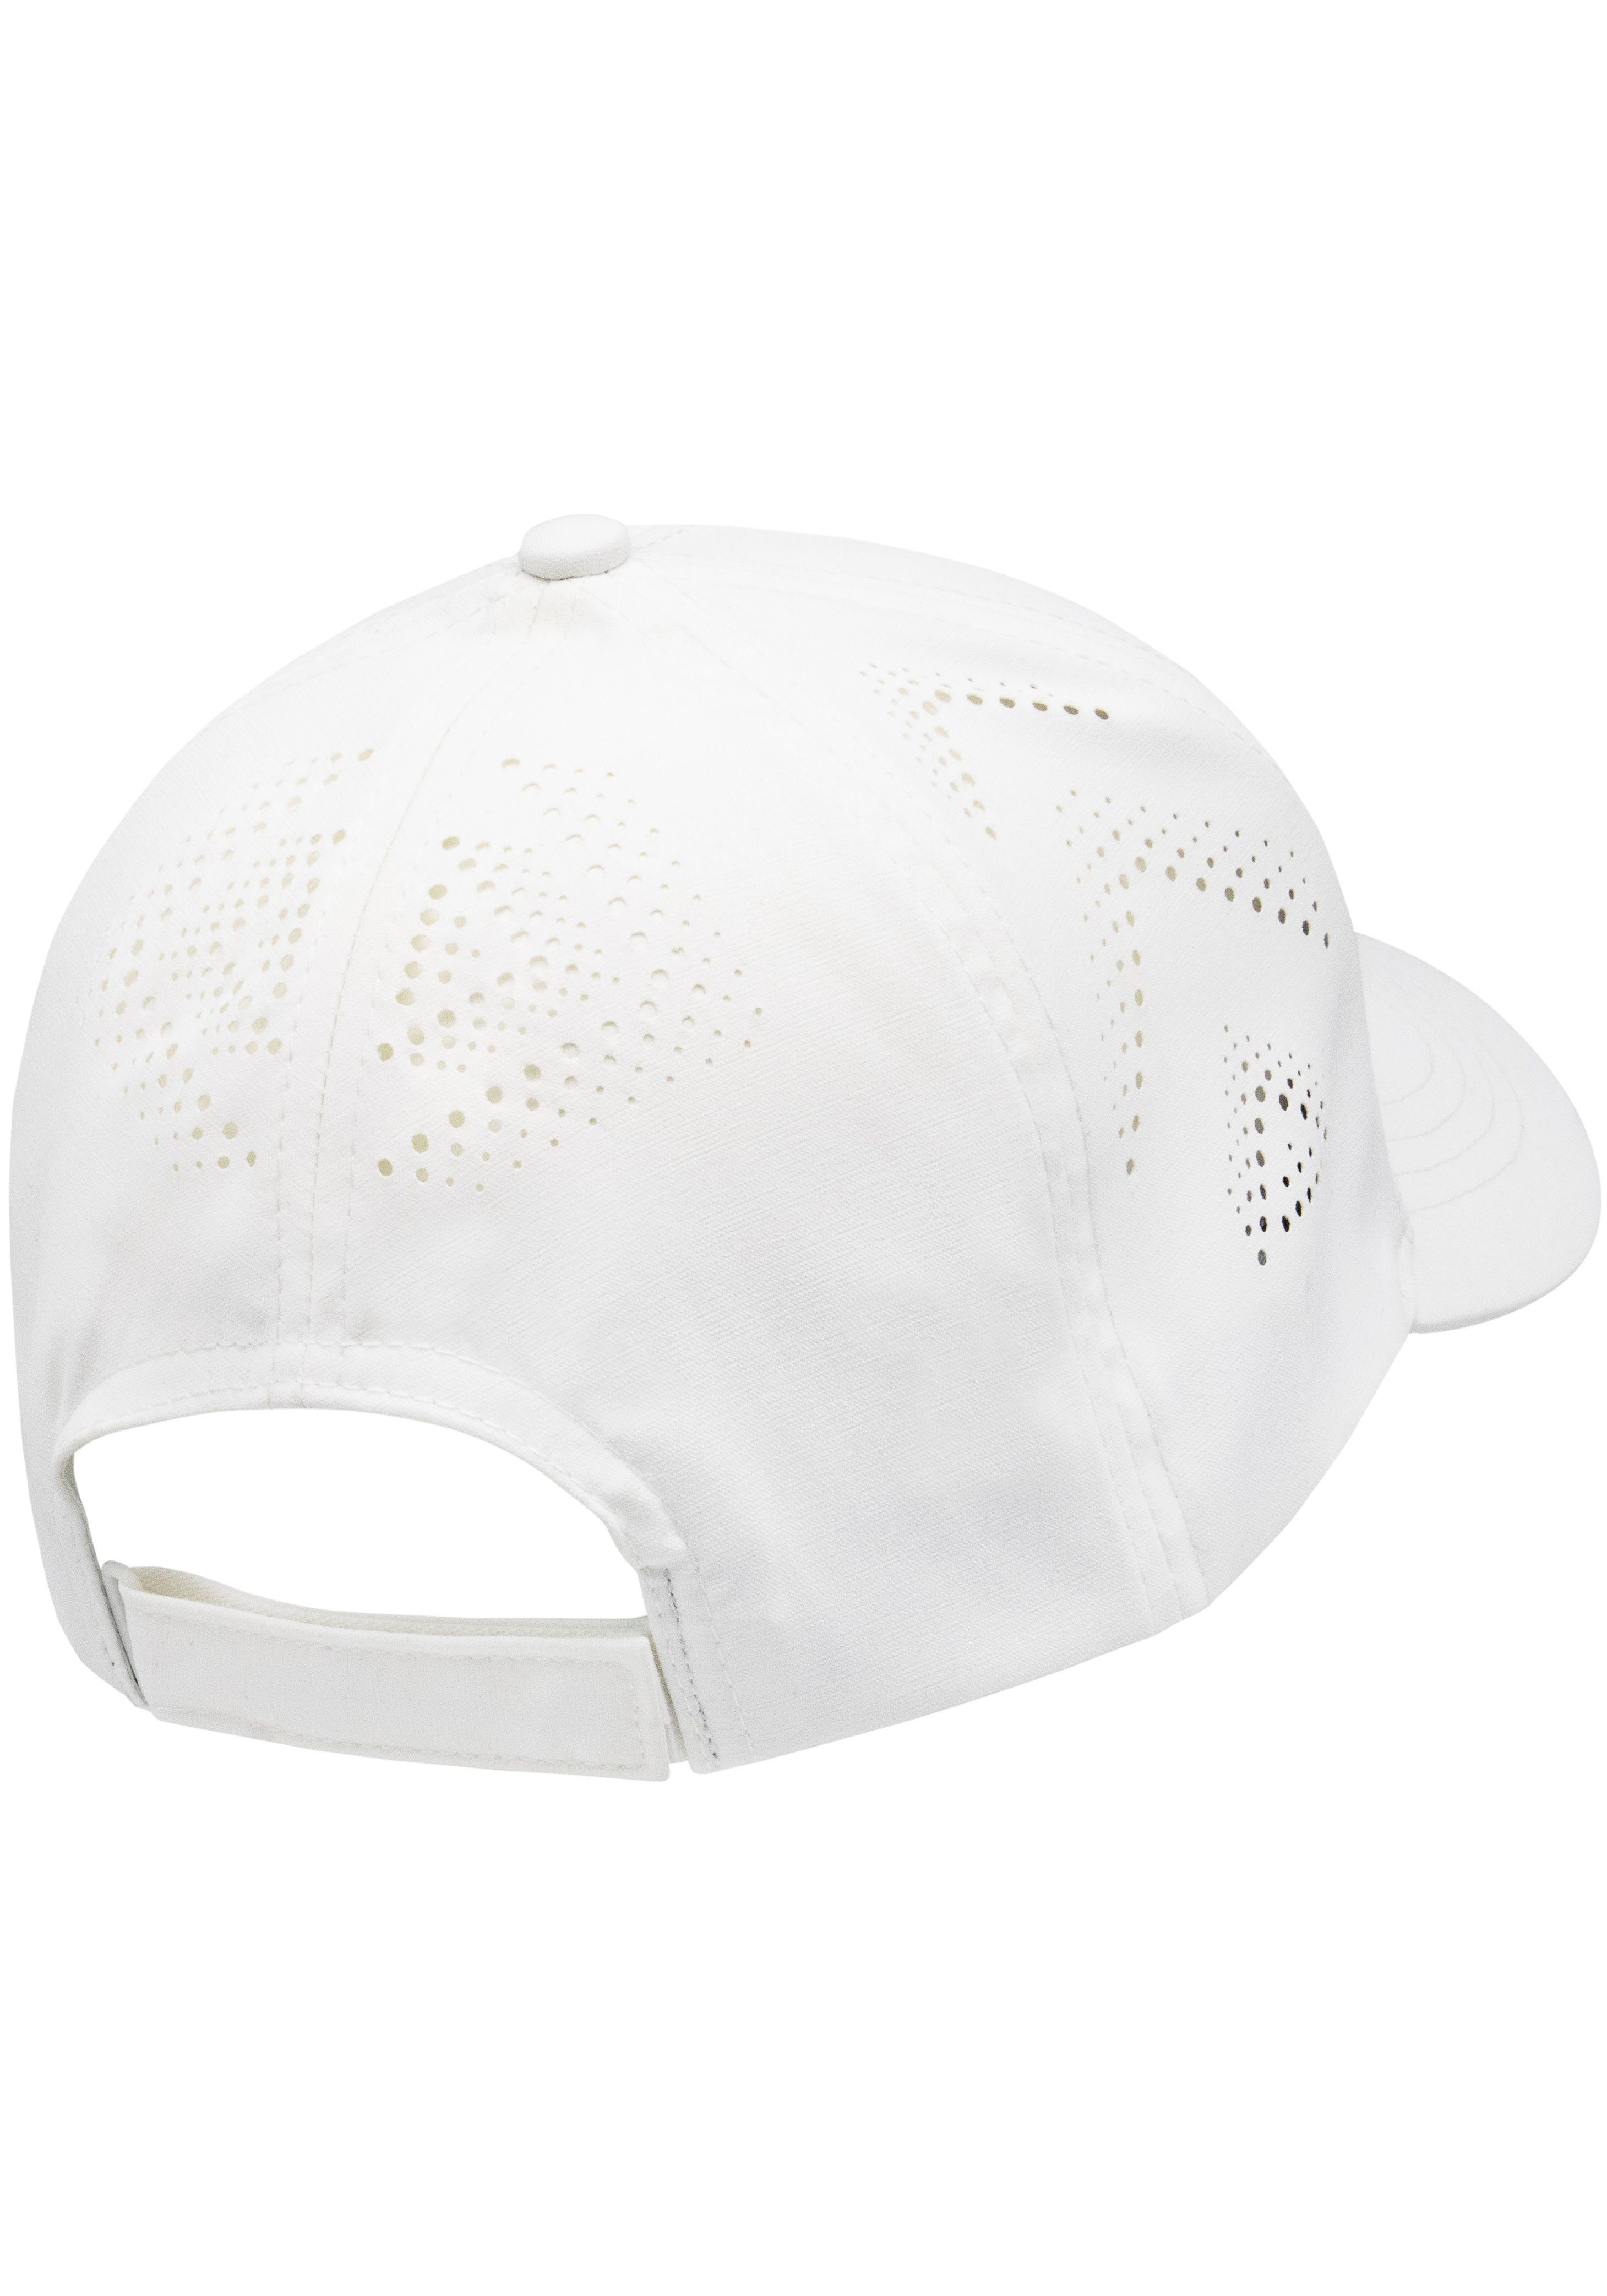 chillouts Baseball Cap Philadelphia Hat, UPF50+ Cap Klettverschluß, mit weiß